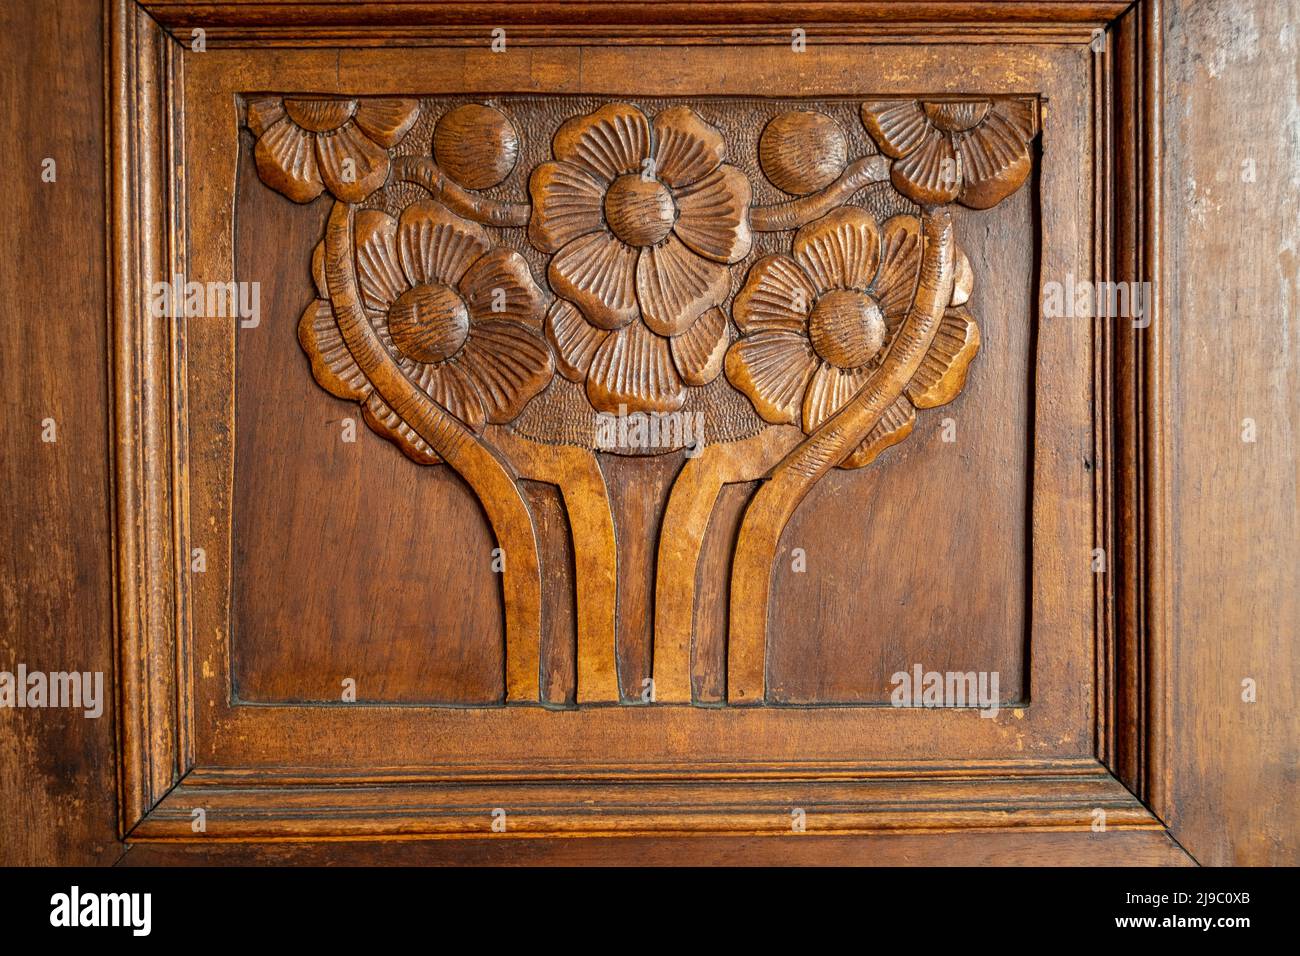 Detalles tallados de muebles antiguos de roble húngaro. Foto de stock